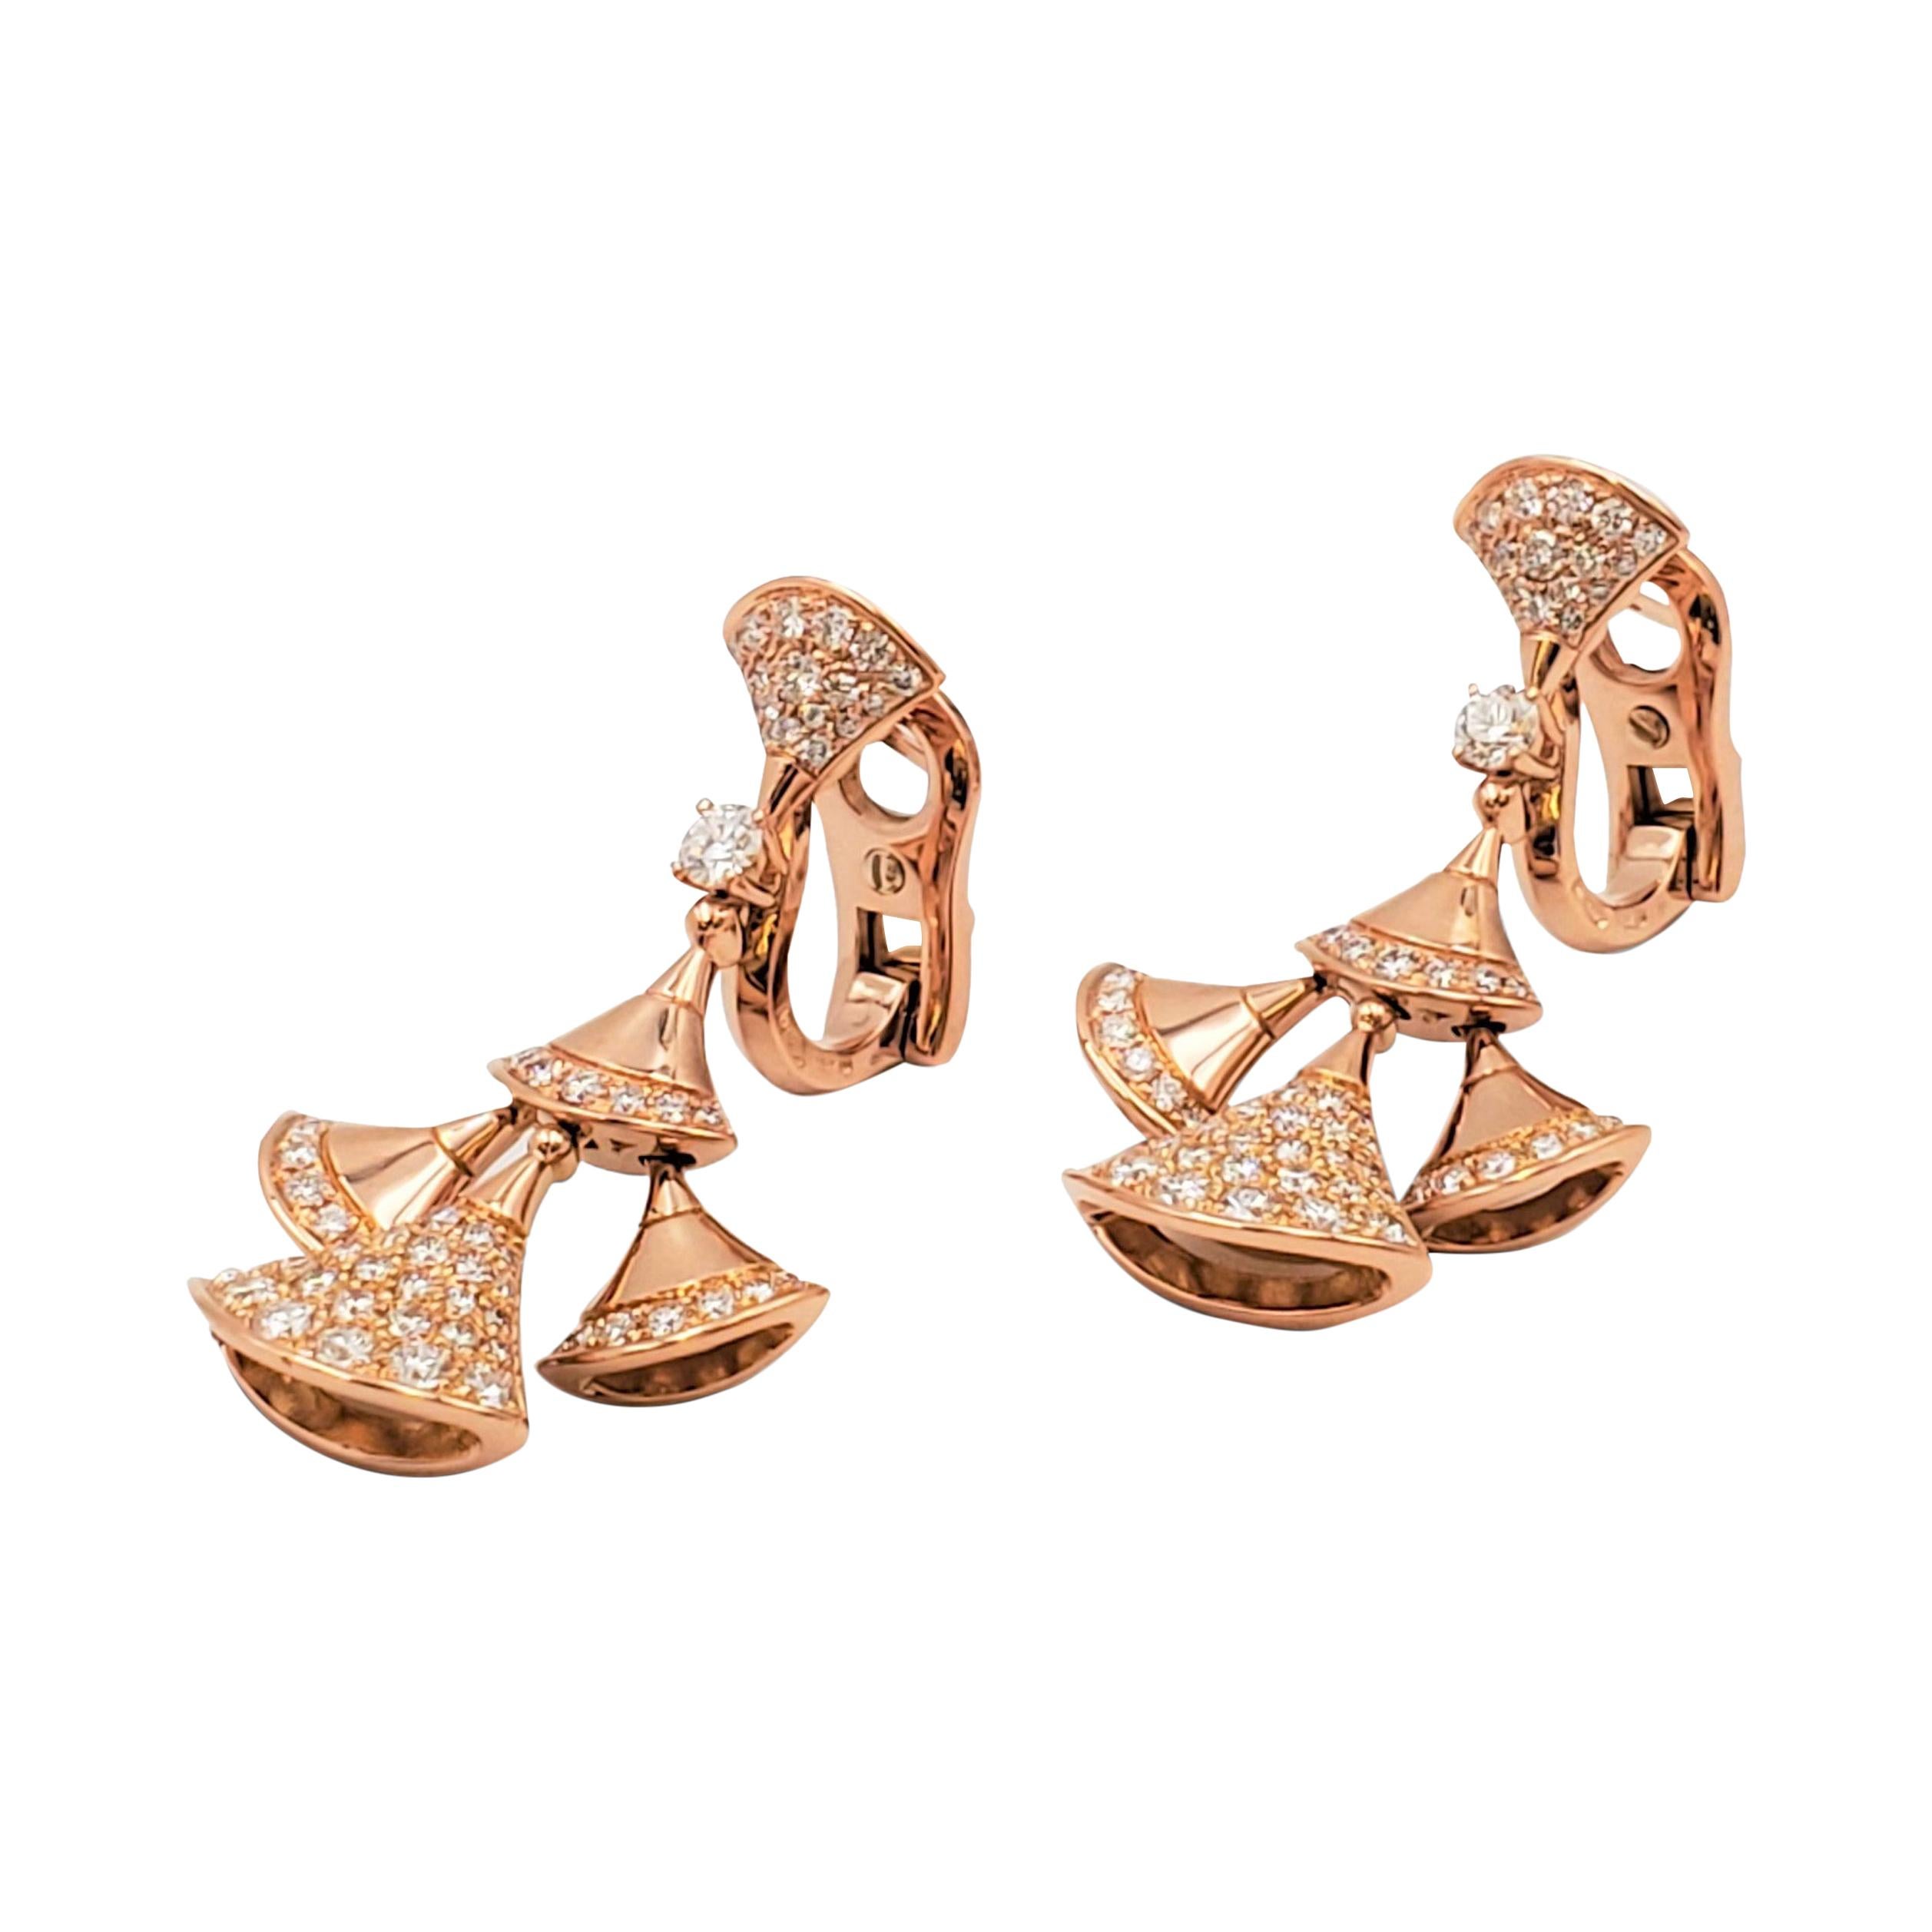 Bvlgari 'Divas' Dream' Rose Gold and Diamond Earrings